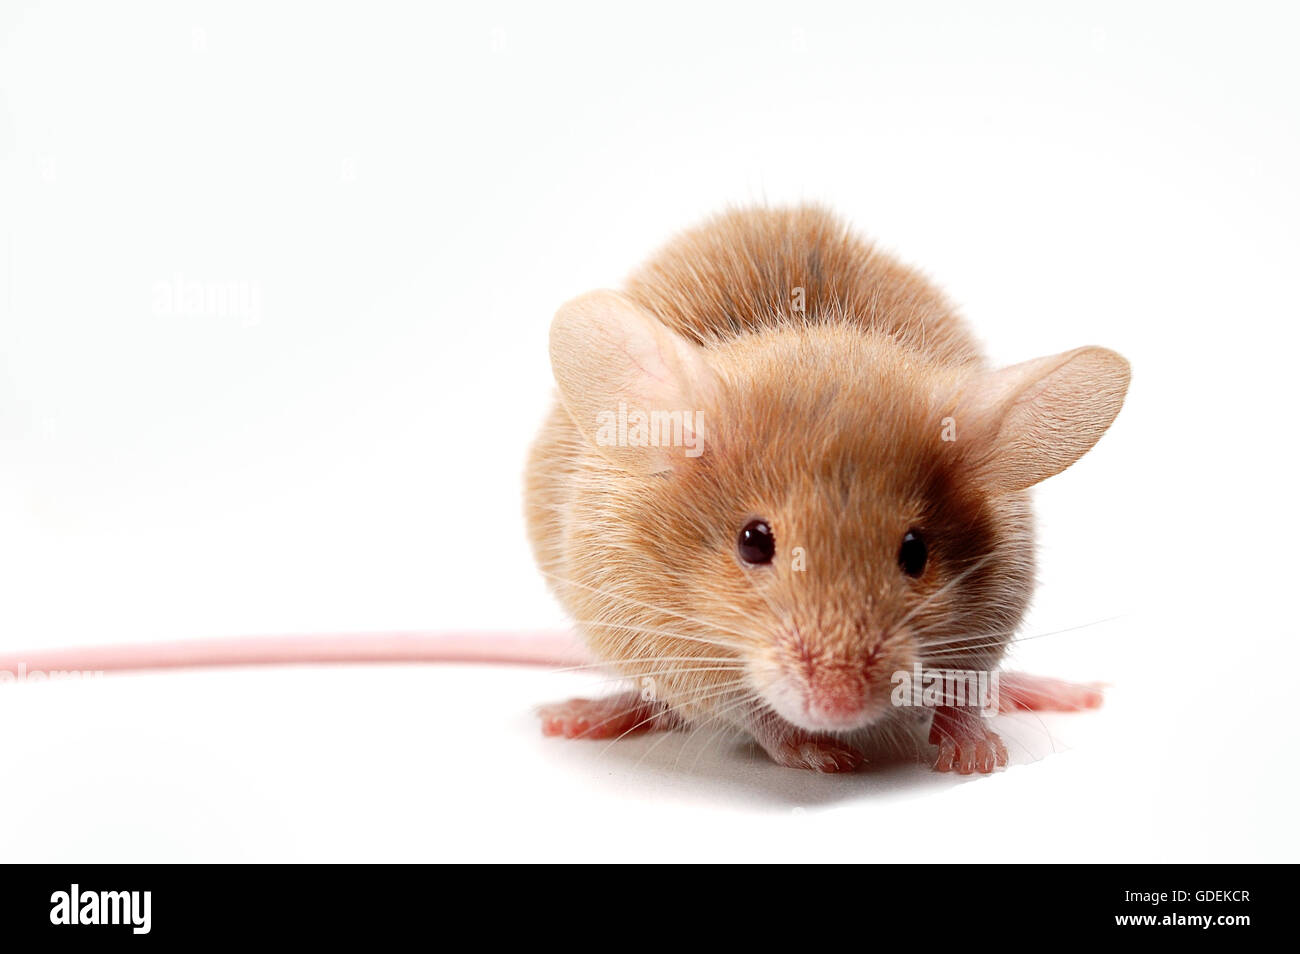 Cute mouse -Fotos und -Bildmaterial in hoher Auflösung - Seite 2 - Alamy